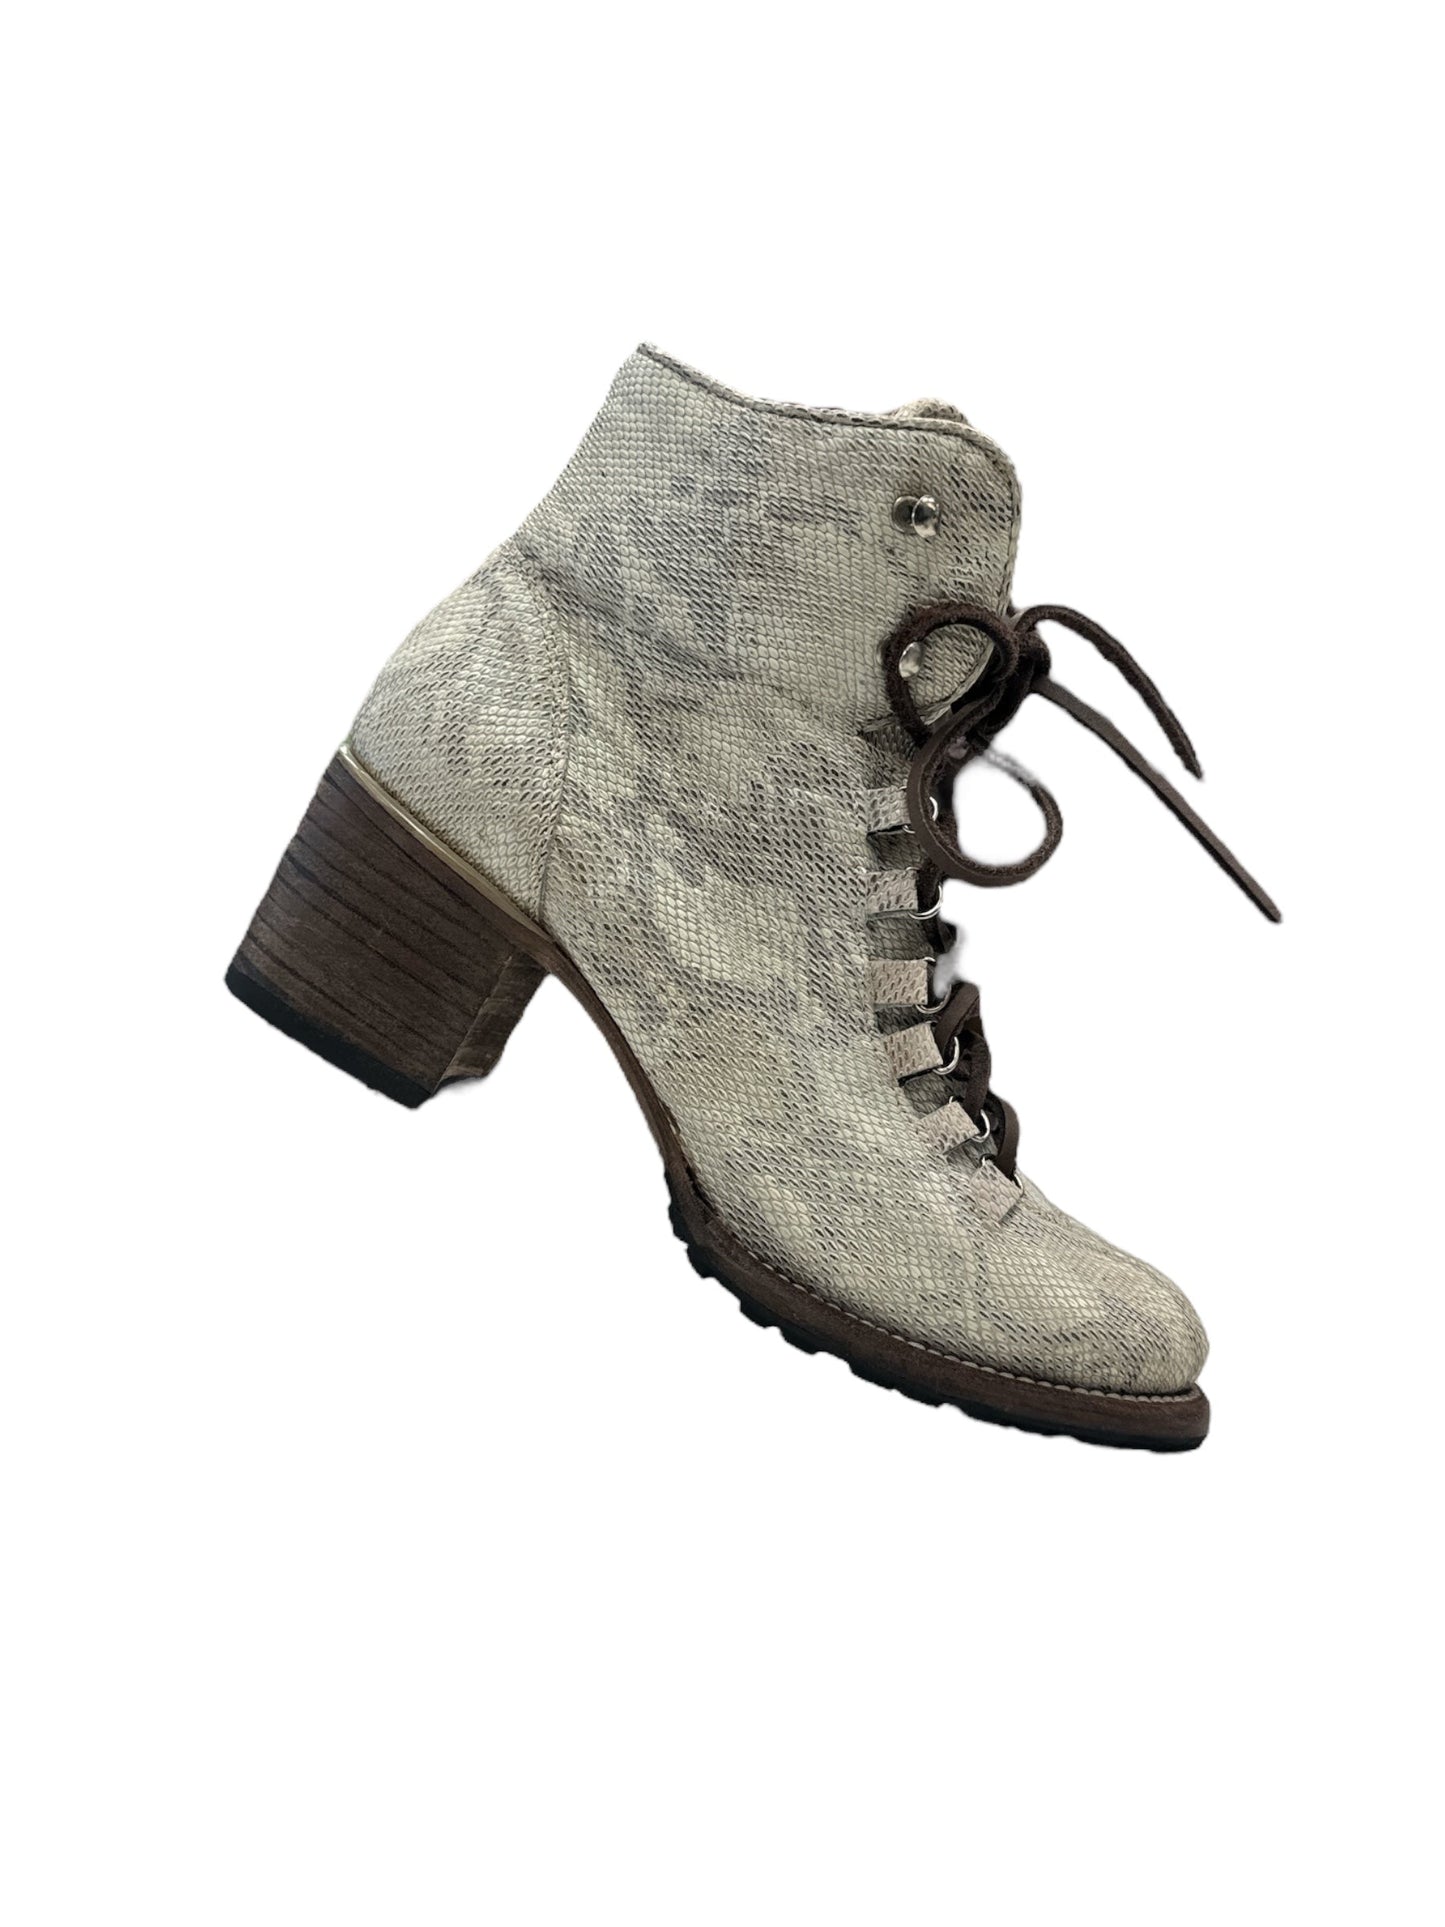 Animal Print Boots Mid-calf Heels Cma, Size 9